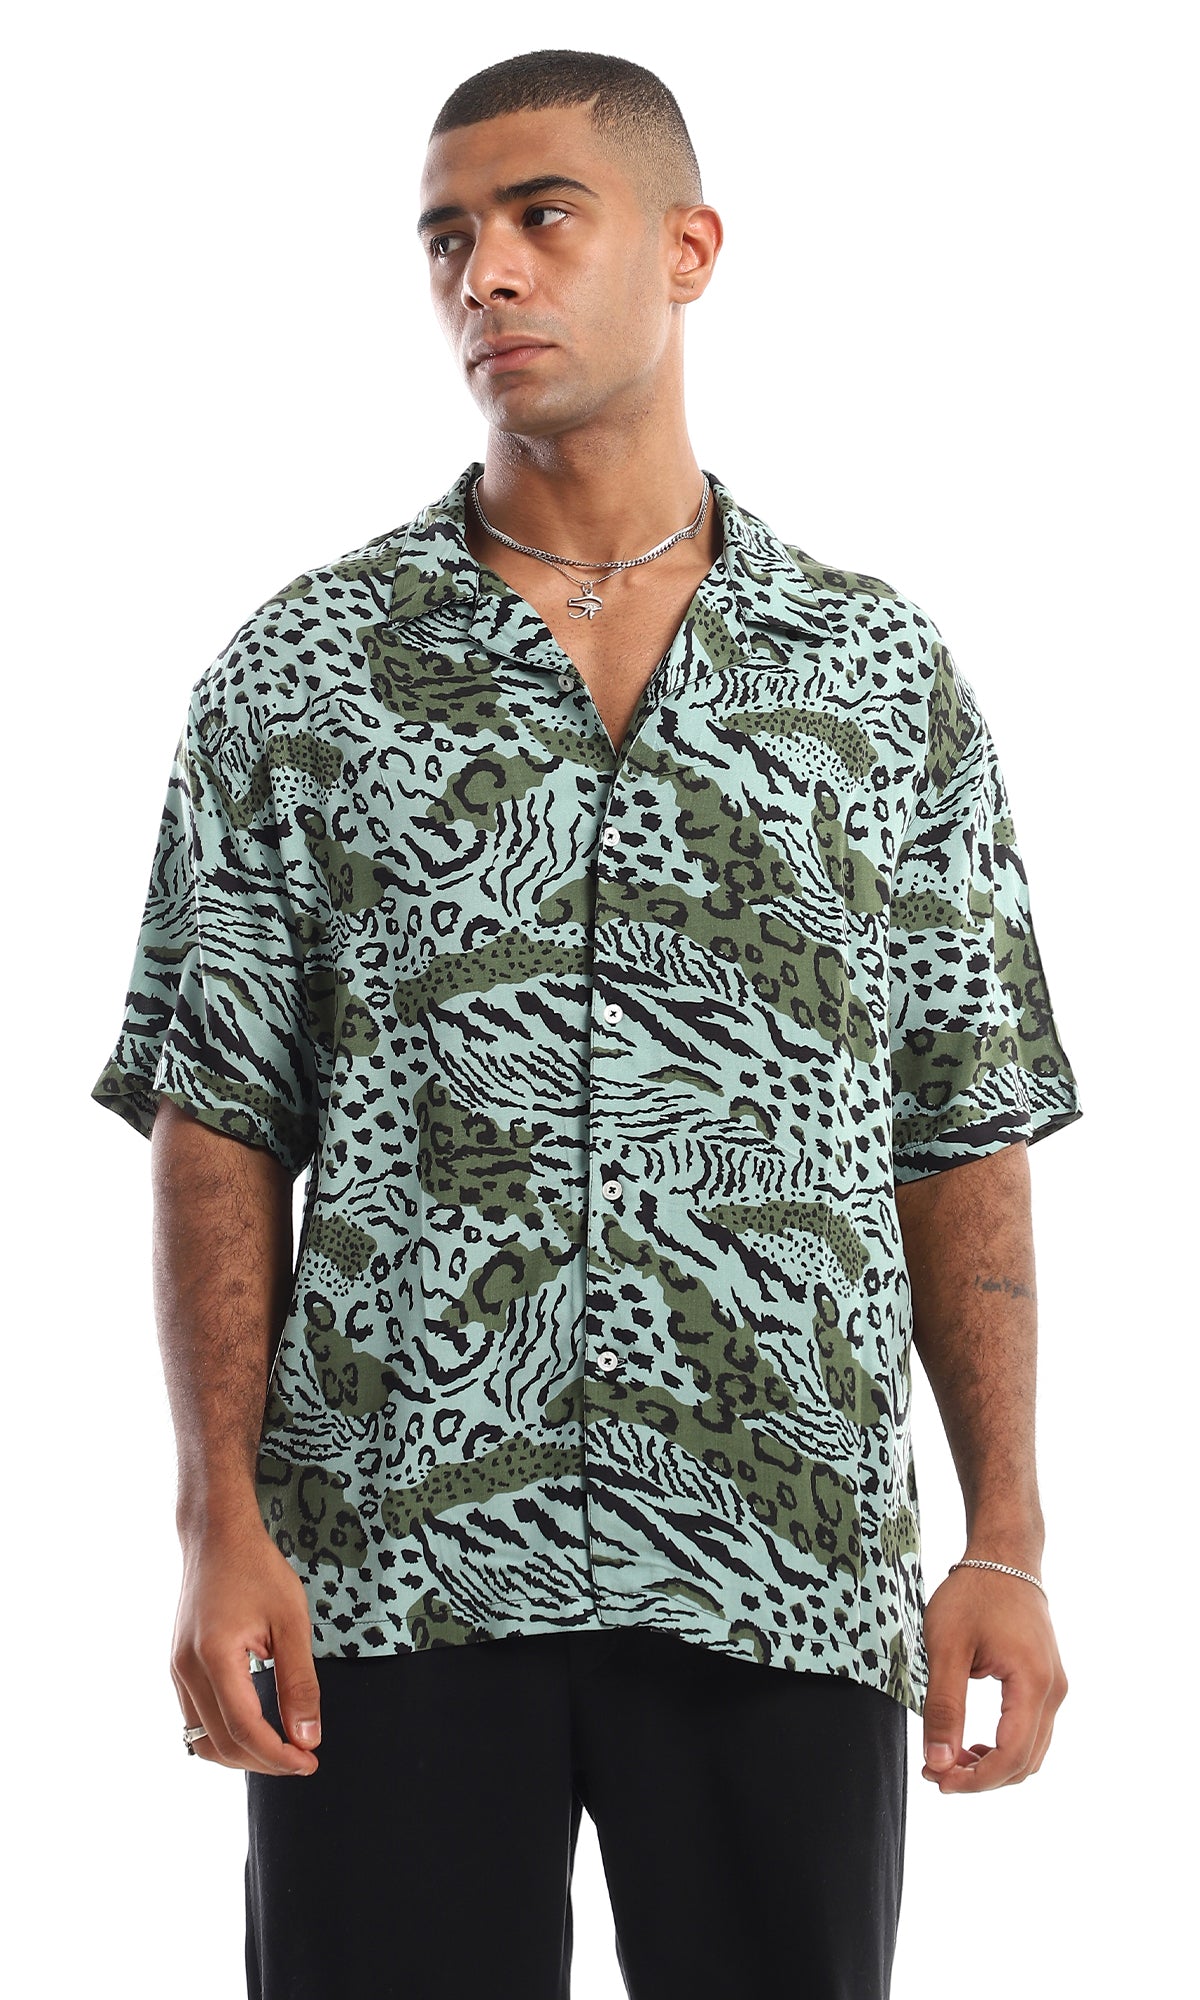 97941 Wild Animal Print Half Sleeves Shirt - Green Shades & Black